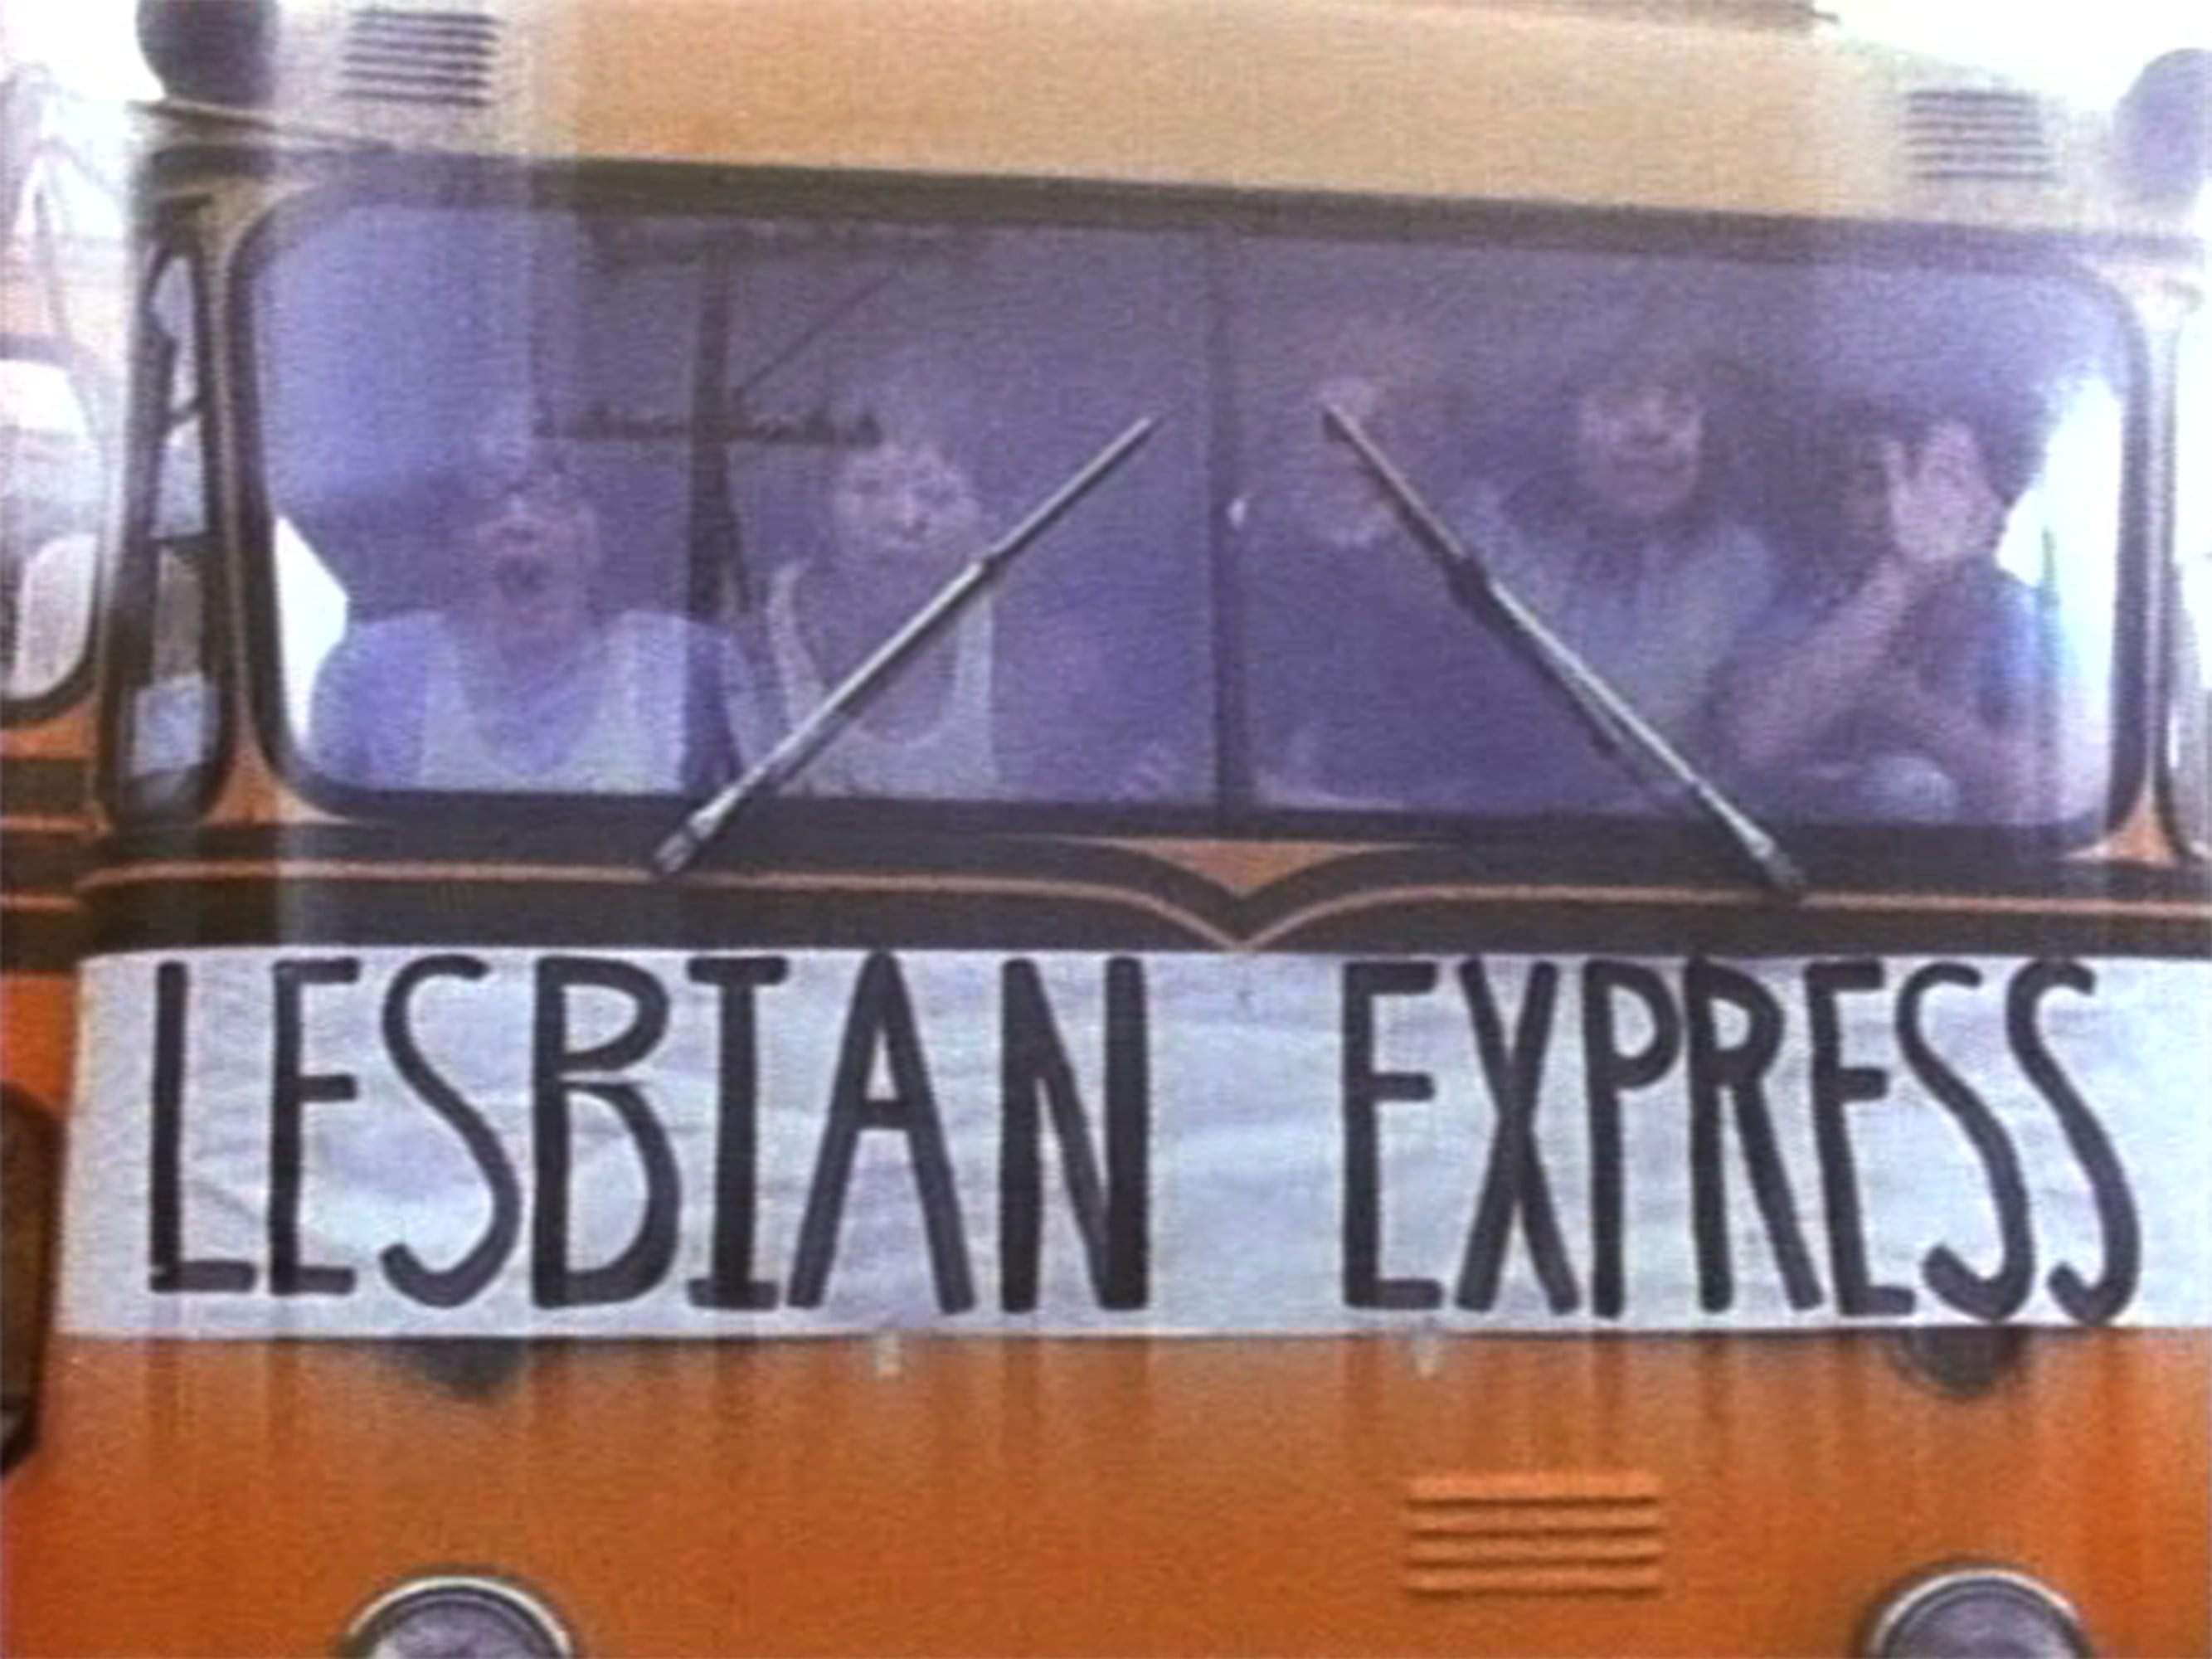 Public Bus Lesbian Telegraph